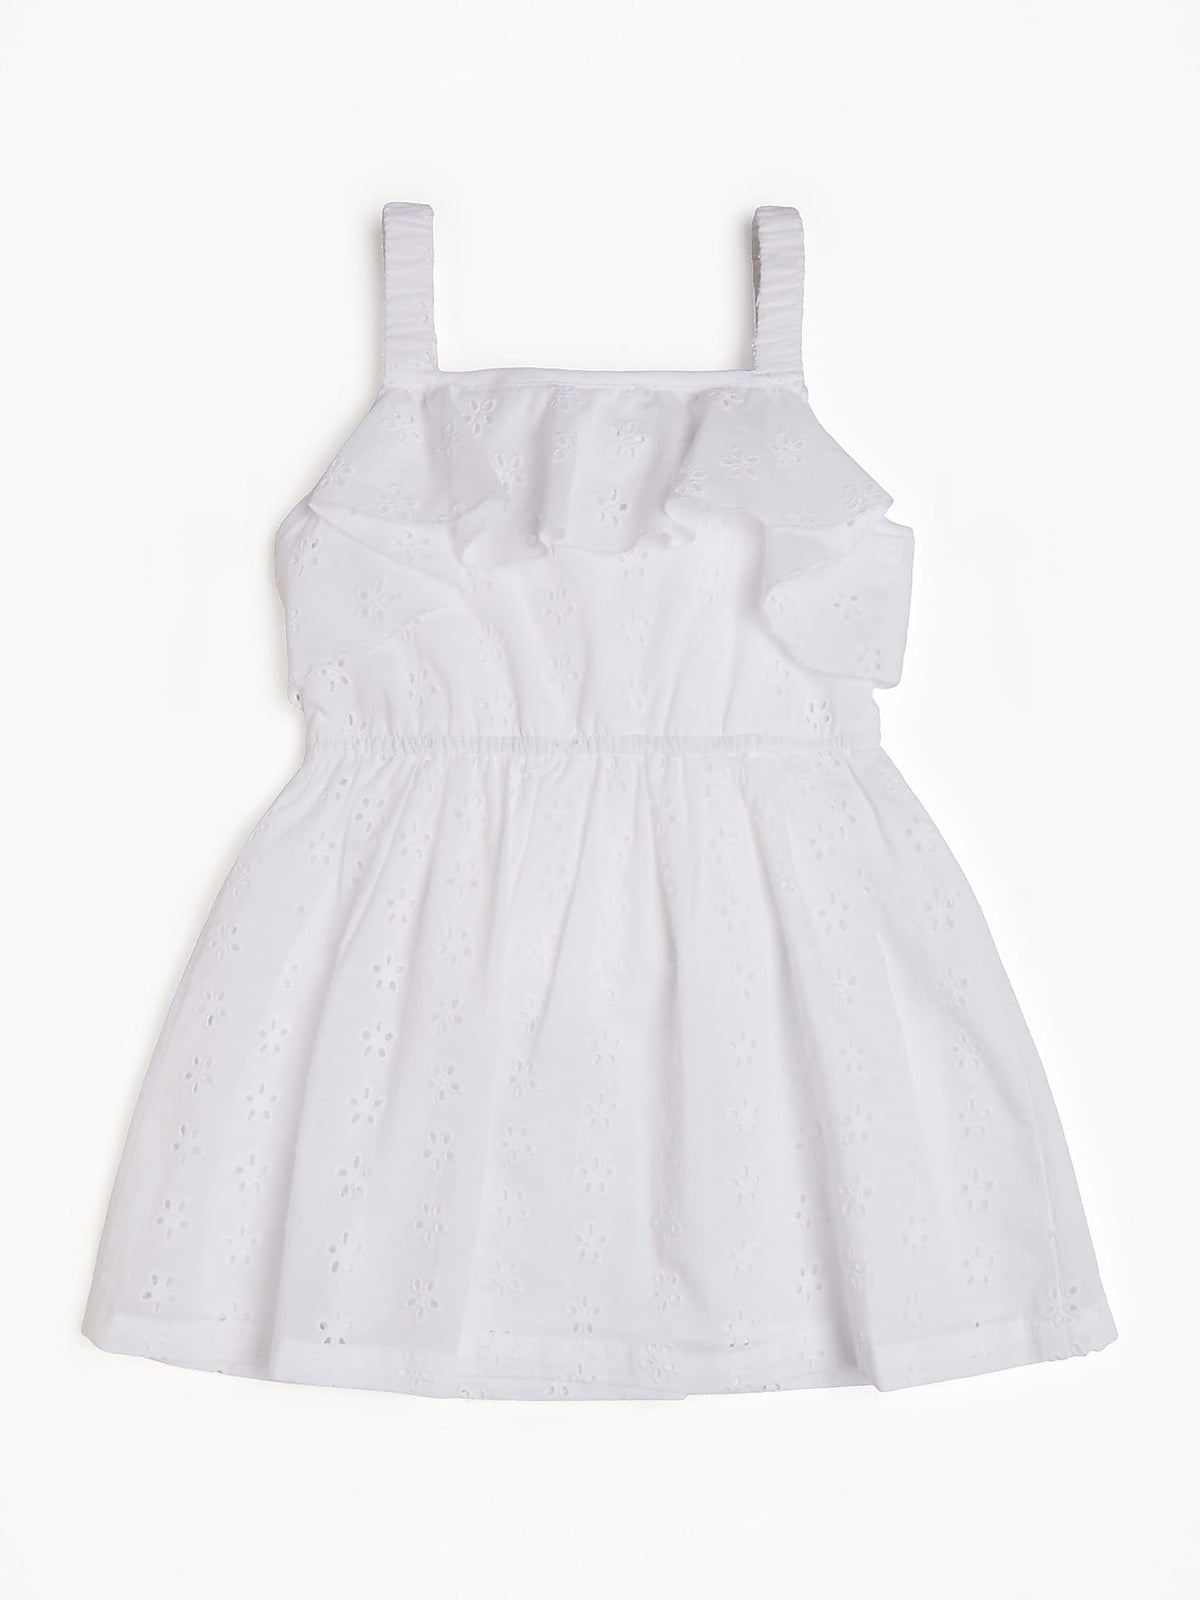 White Cotton Dress - MamaSmile